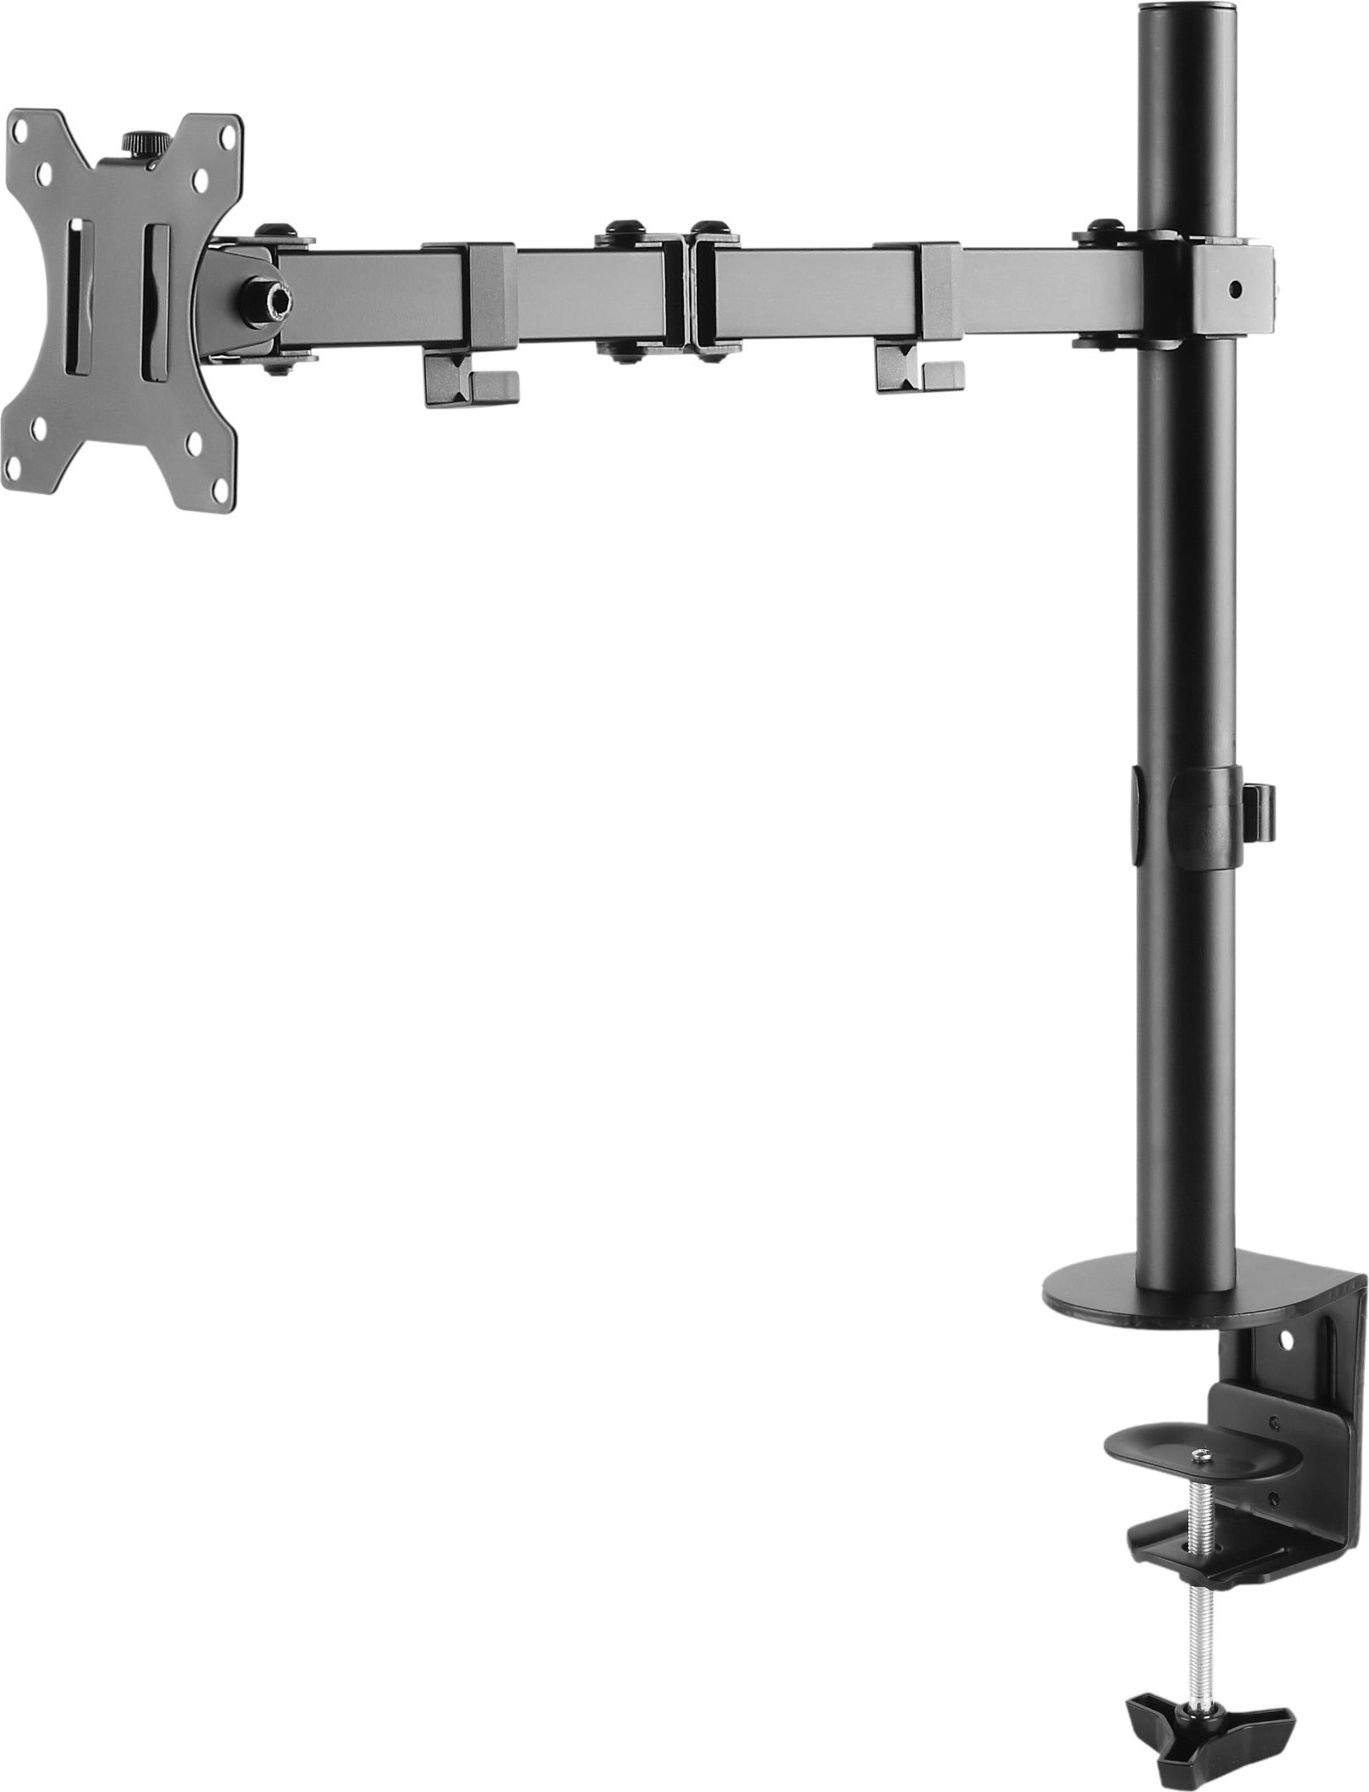 Suport de birou pentru monitor, brat dubla articulatie, 13 - 32 inch, Negru, Techly, ICA-LCD 503BK